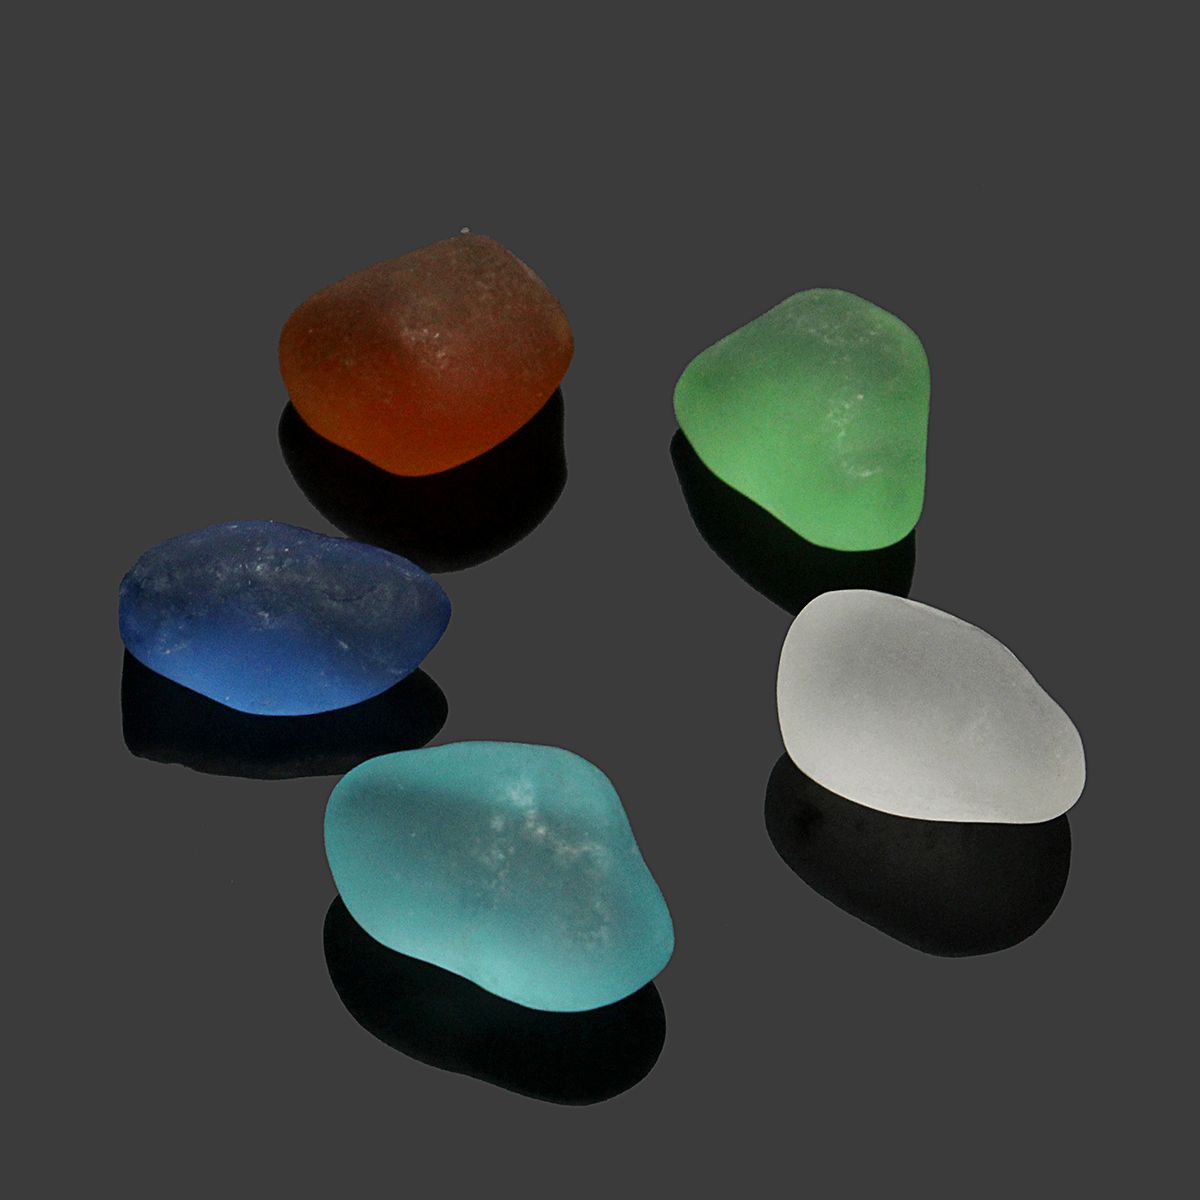 10-16mm-Mixed-Color-Undrilled-Sea-Beach-Glass-Beads-Bulk-DIY-Jewelry-Pendant-Decor-1172005